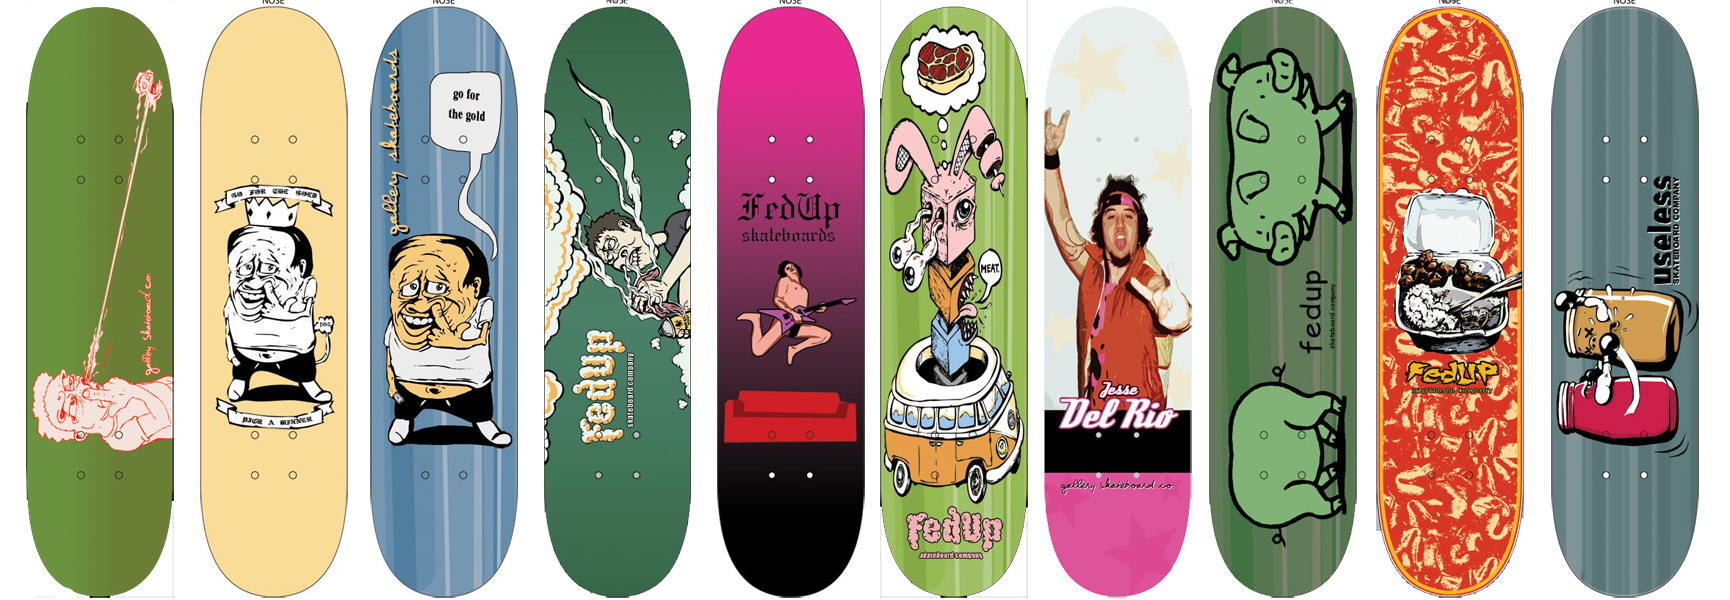 flicker korruption stout skateboard designs, random. by kirkfinger on DeviantArt